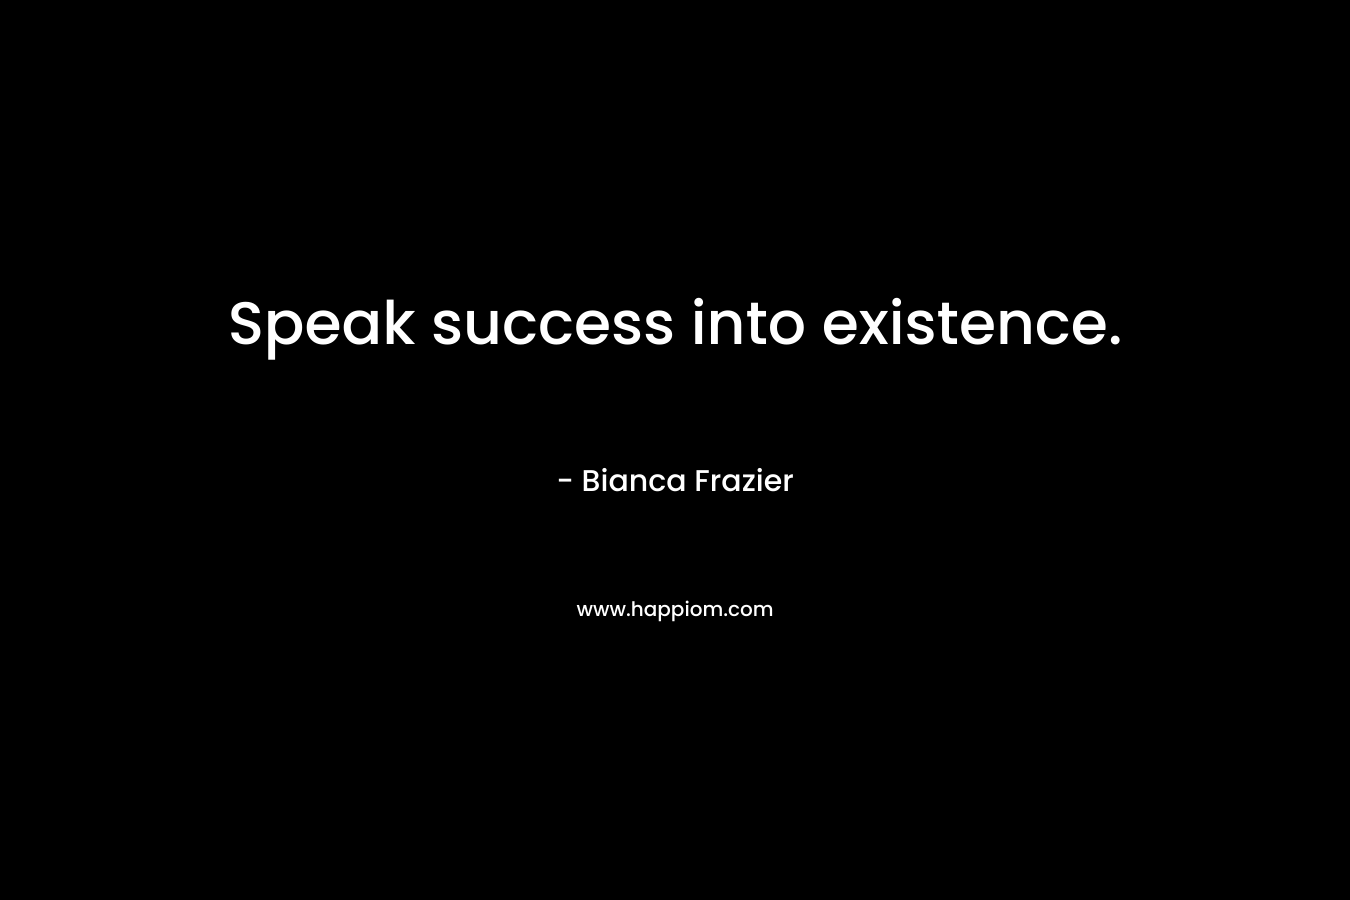 Speak success into existence.